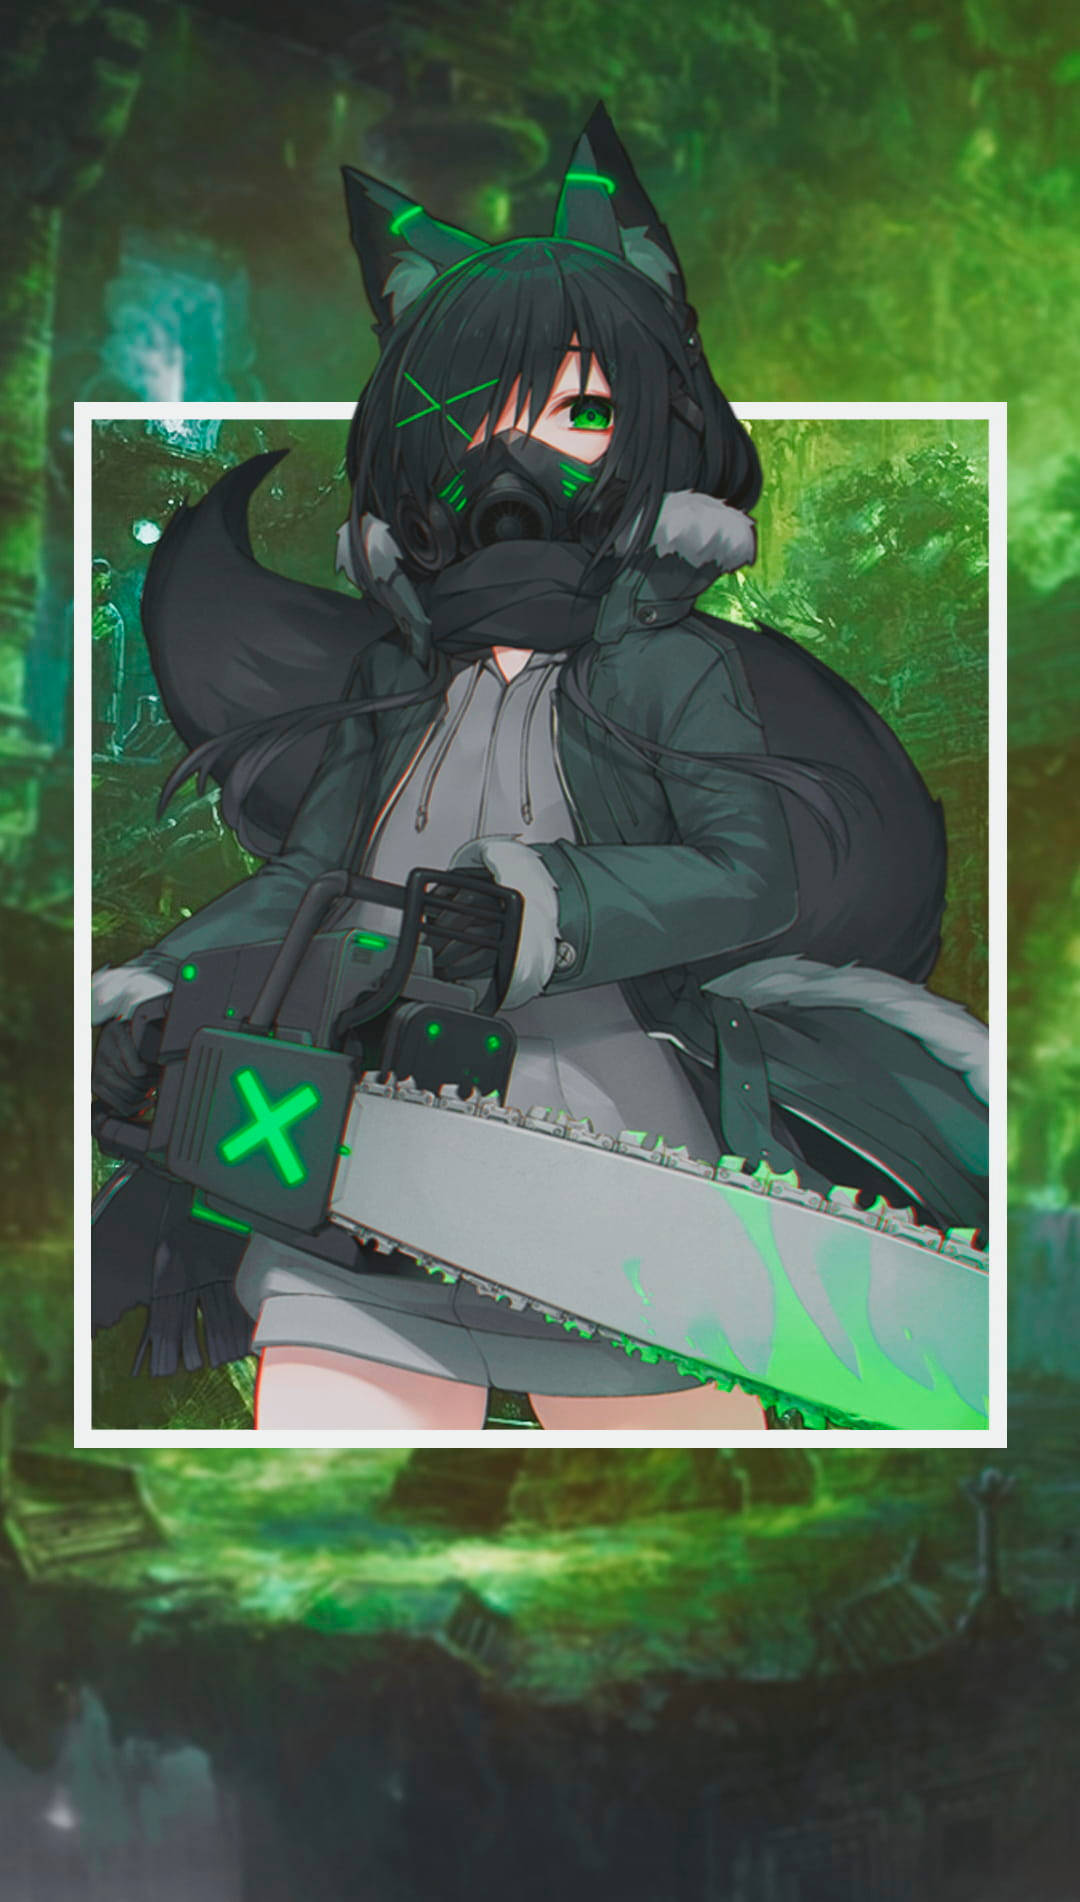 Toxic Wolf Aesthetic Anime Girl Iphone Background